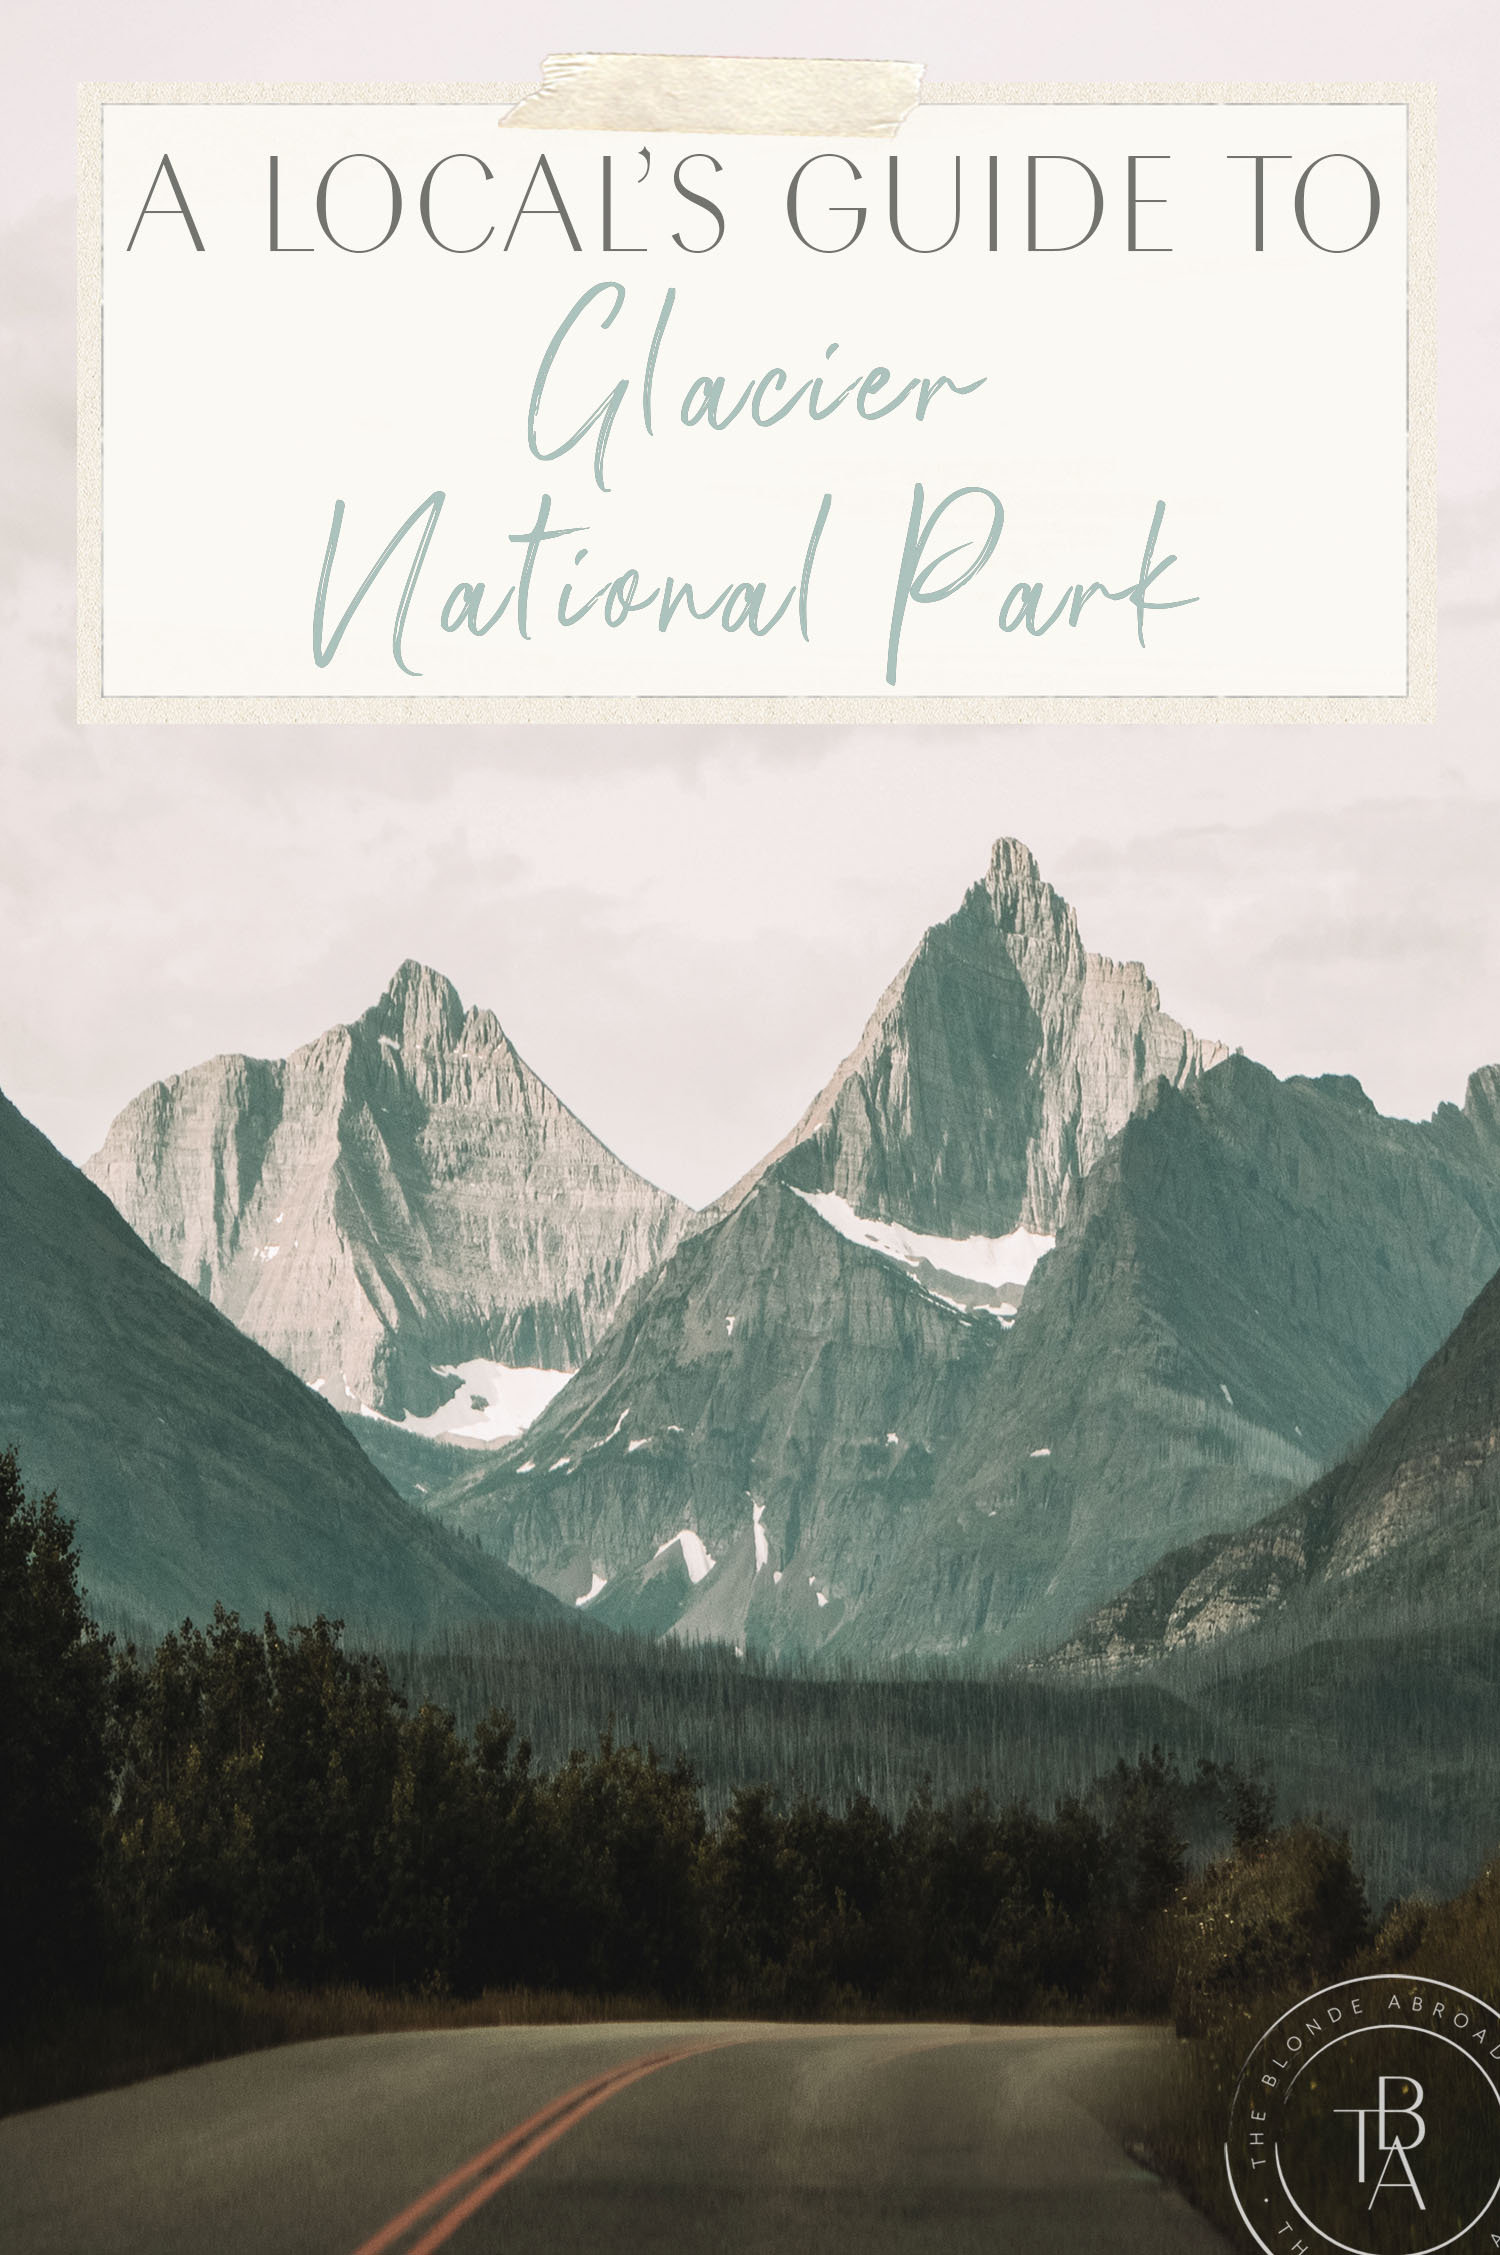 Locals Guide to Glacier National Park